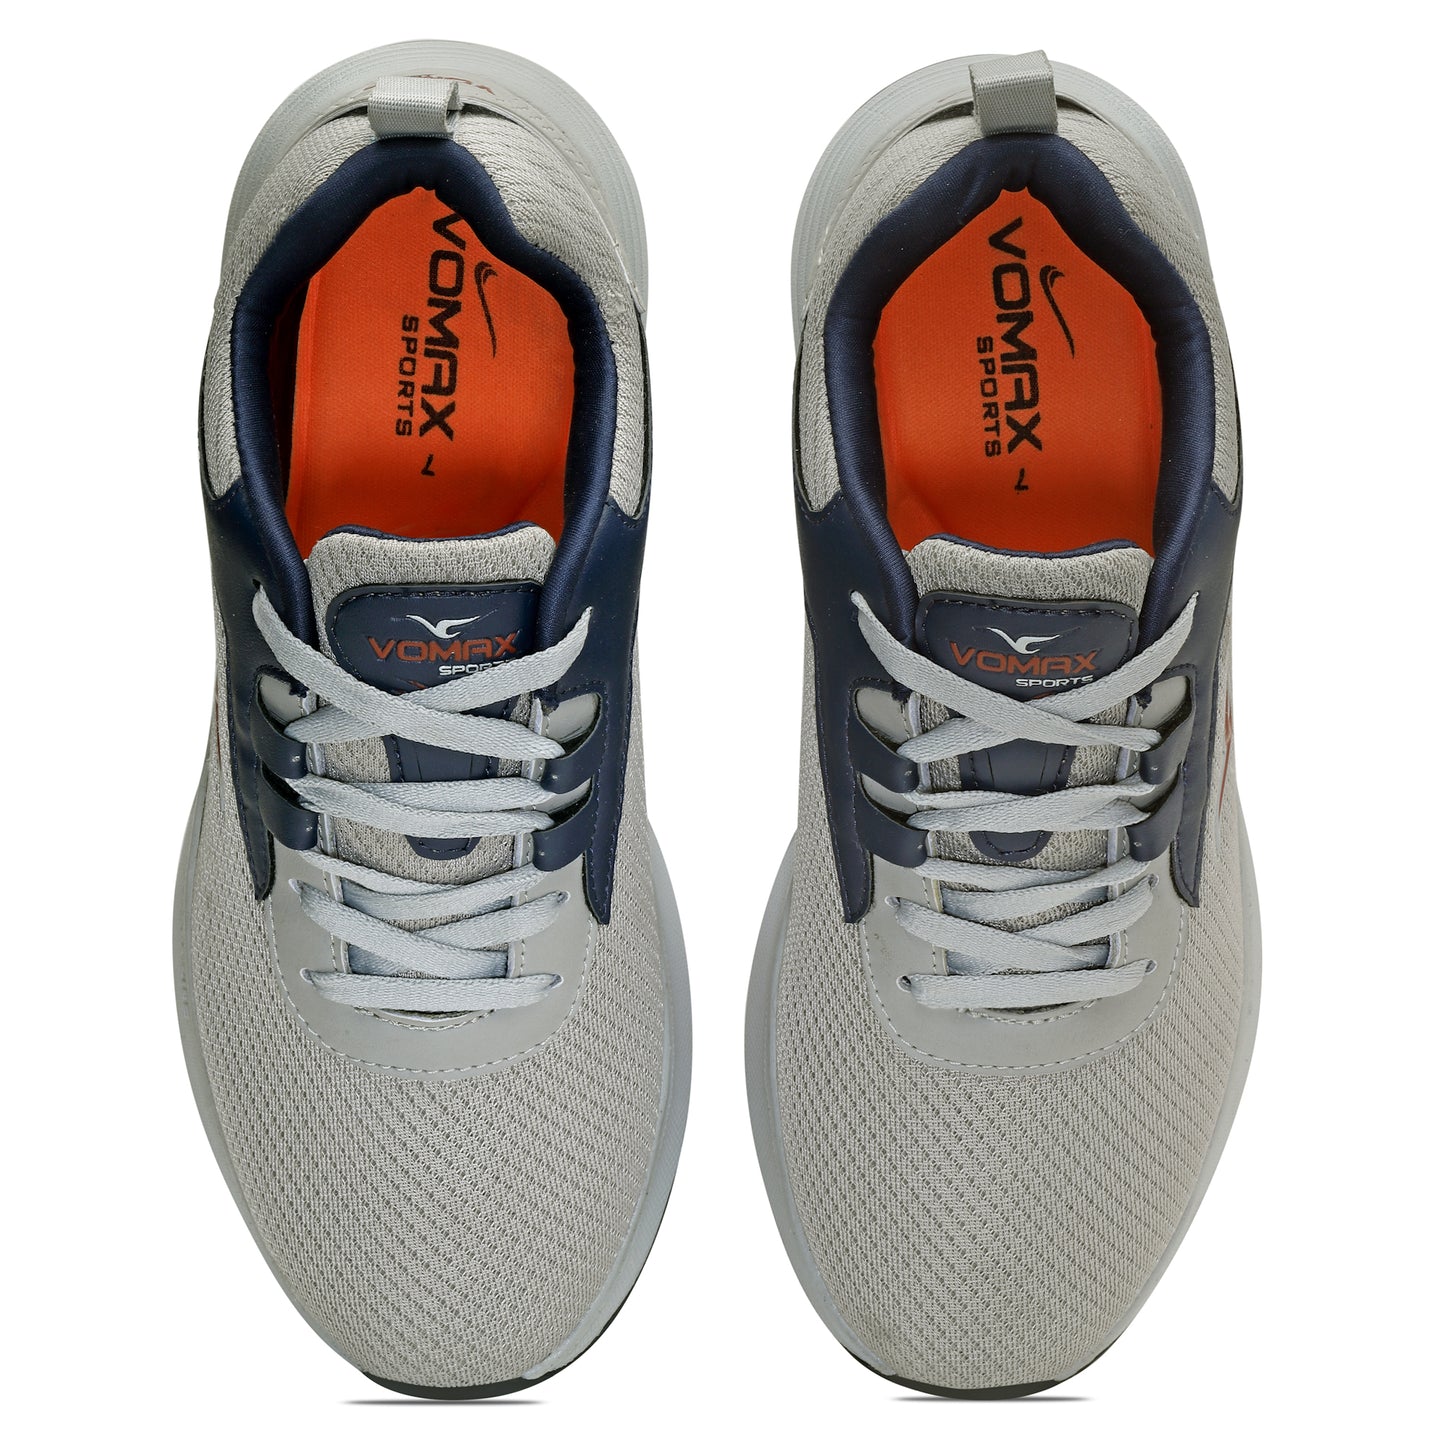 Vomax Sports York-02 Men's Sports Road Running Shoes